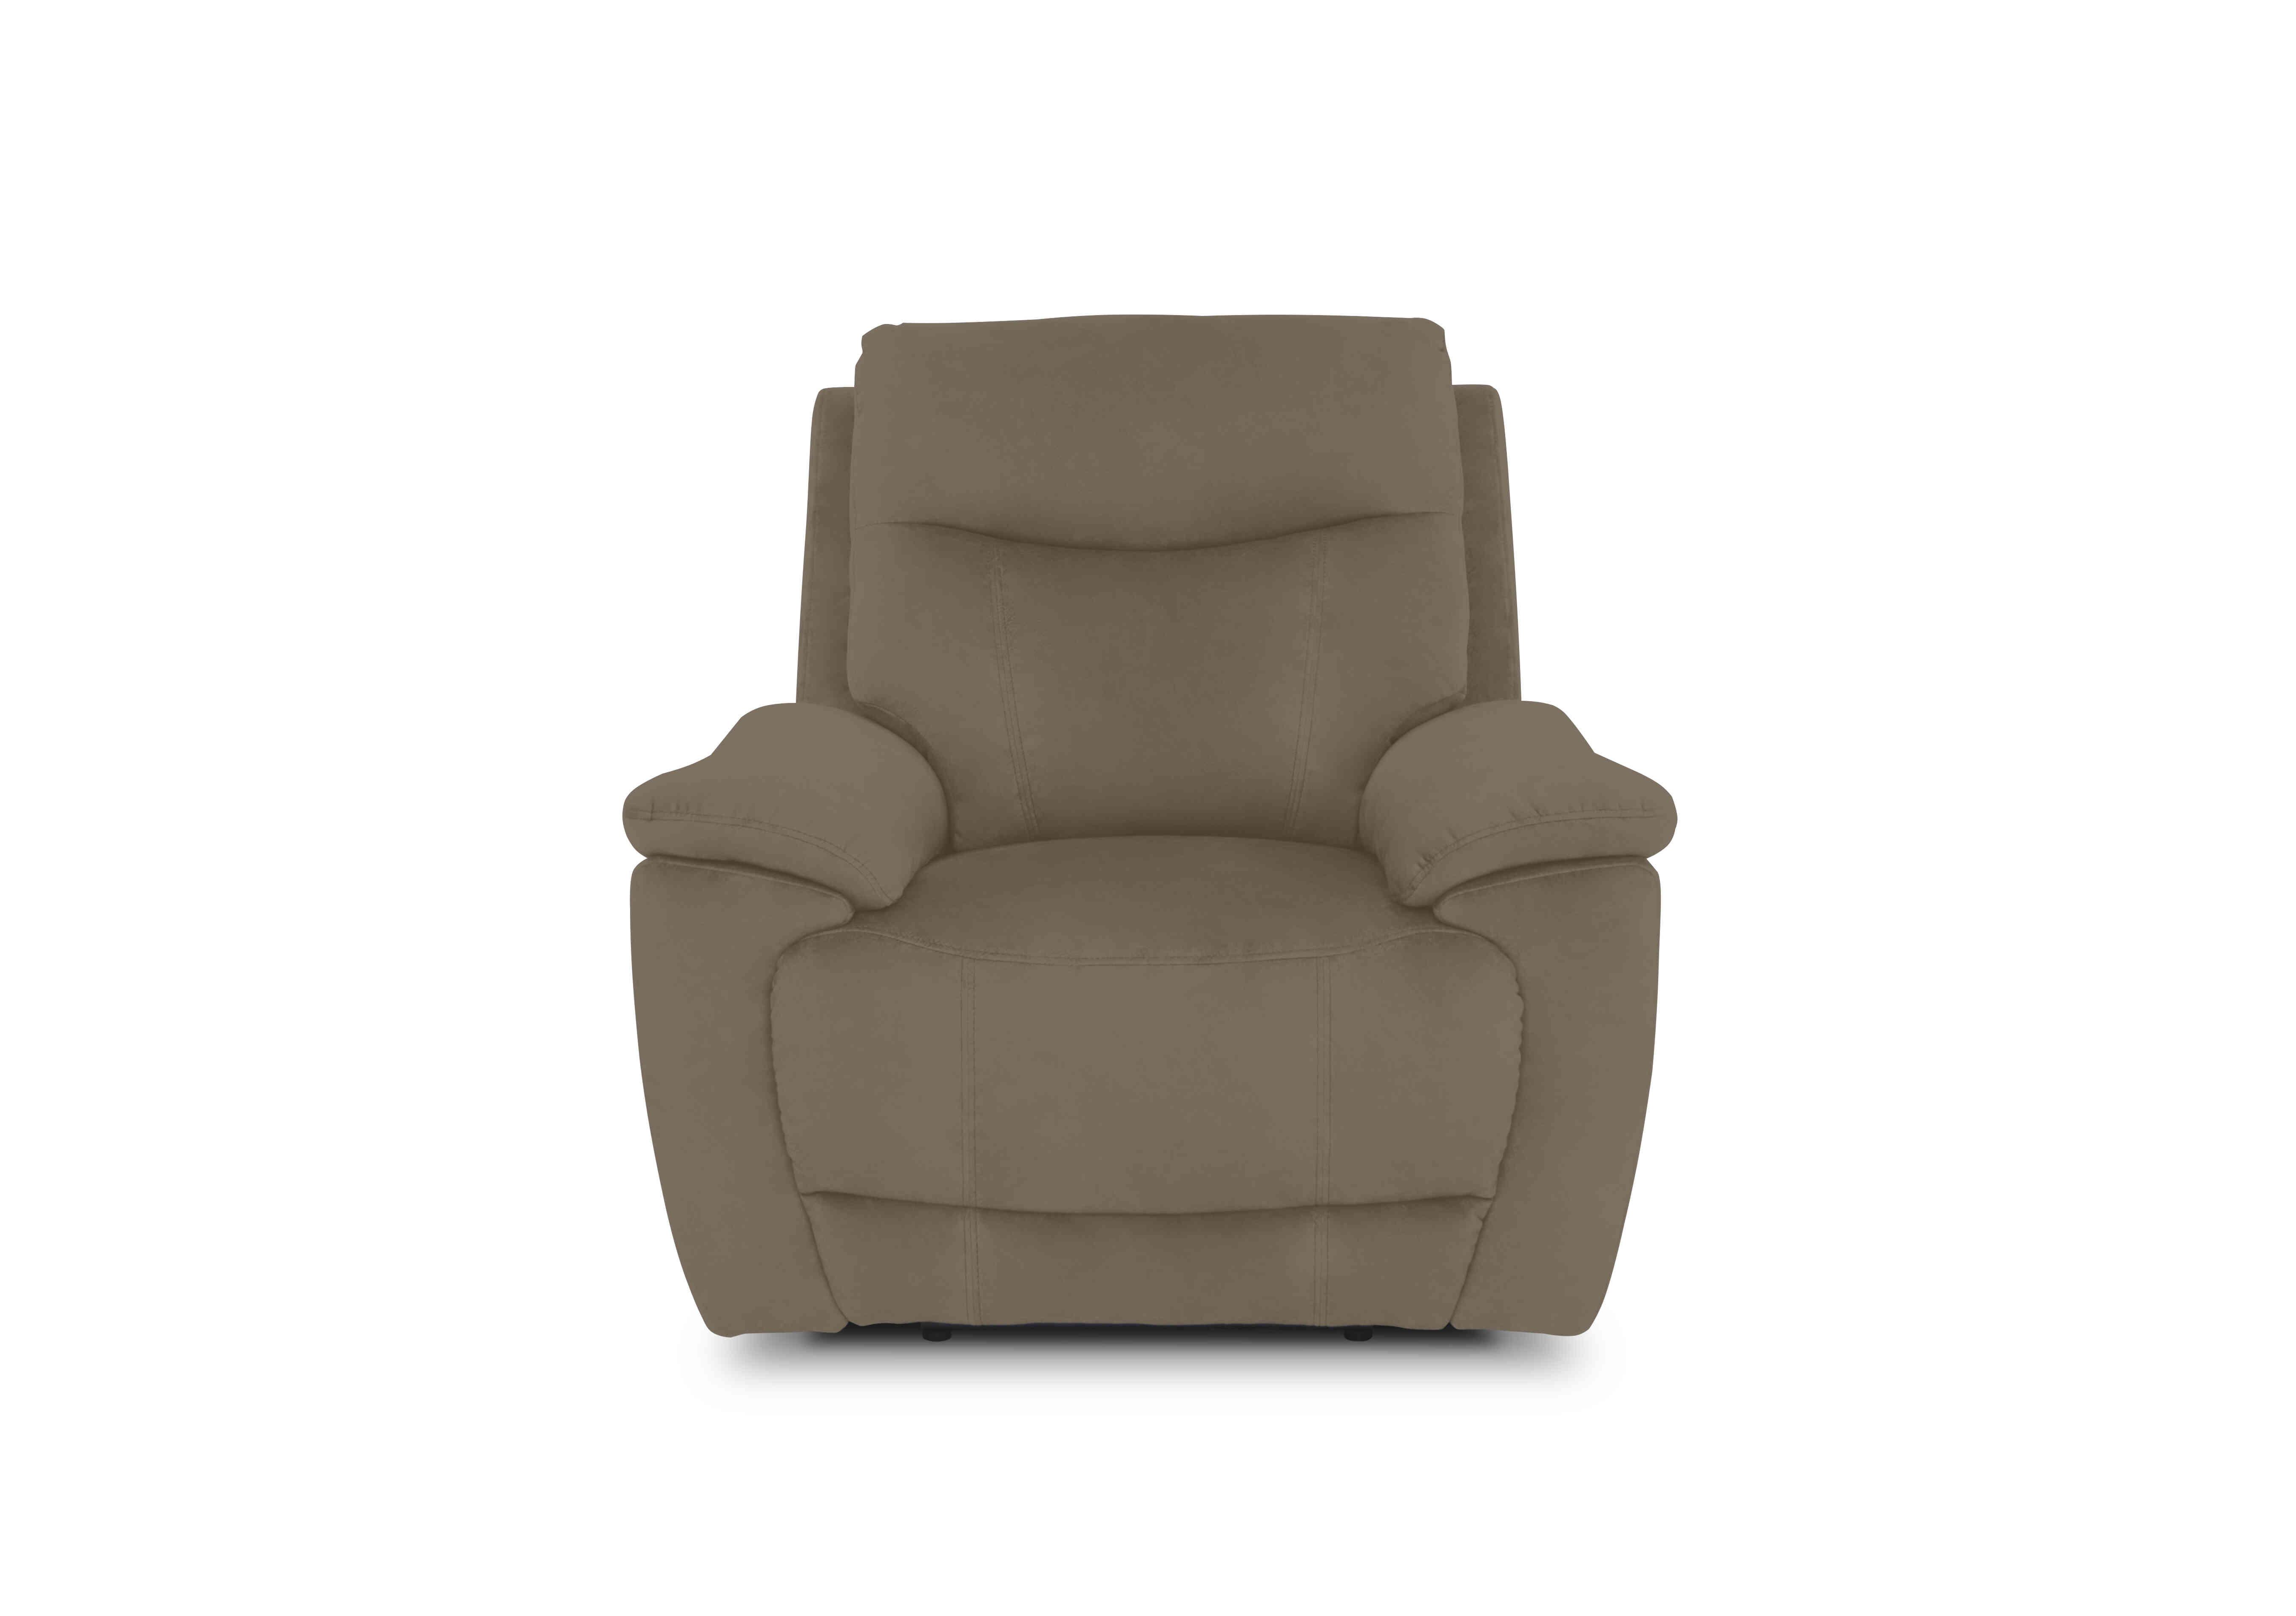 Sloane Fabric Chair in 51014 Opulence Cedar on Furniture Village